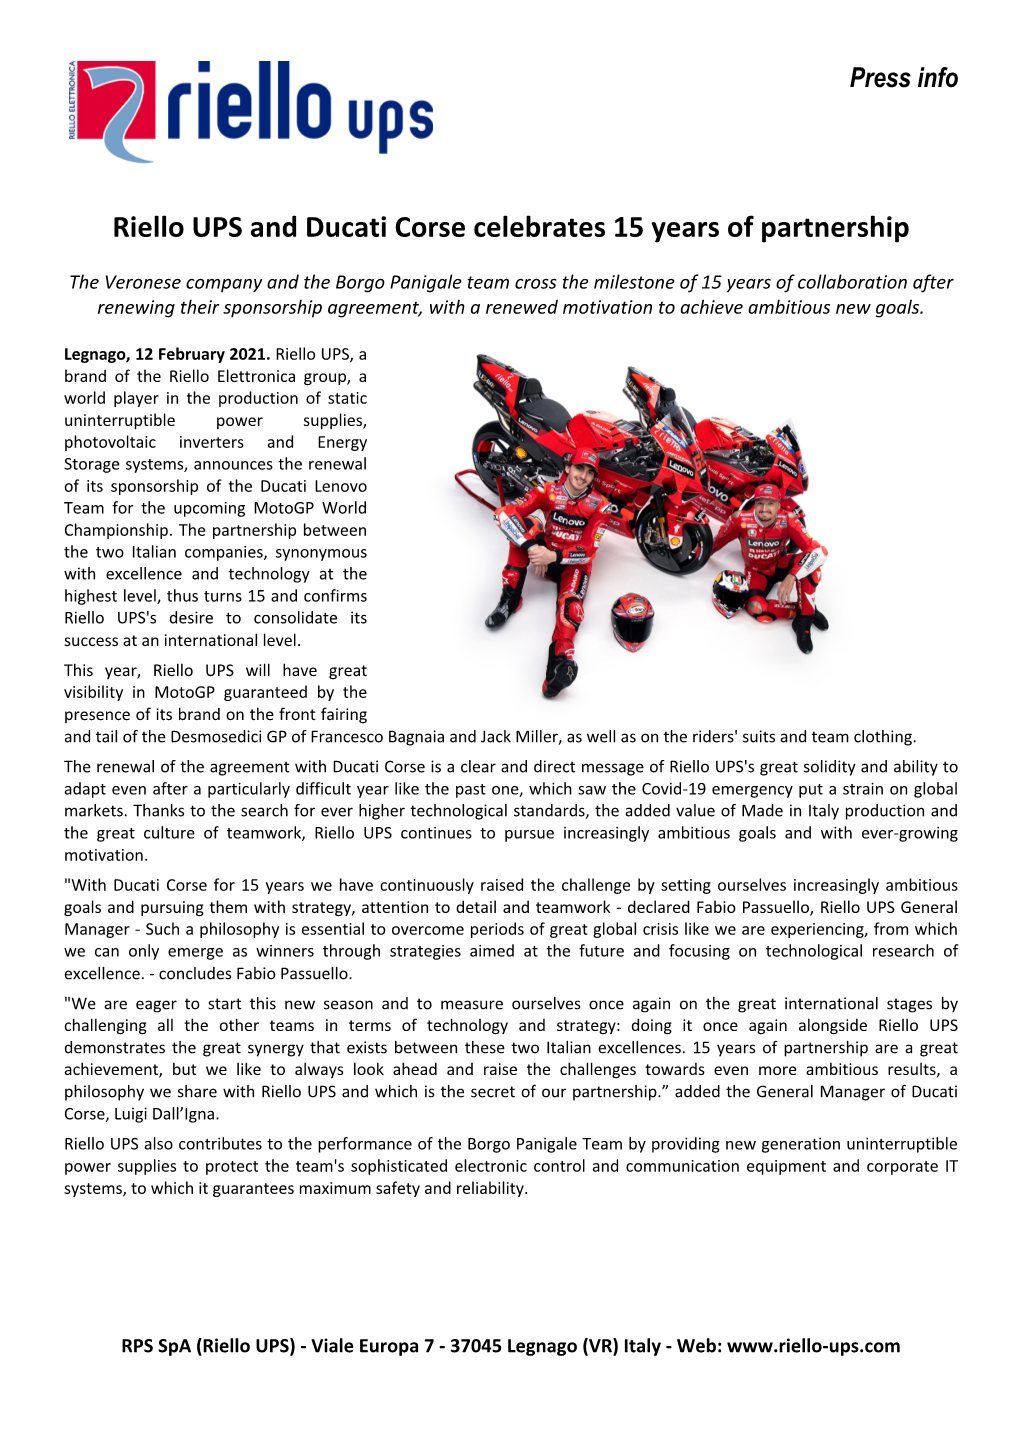 Riello UPS and Ducati Corse Celebrates 15 Years of Partnership